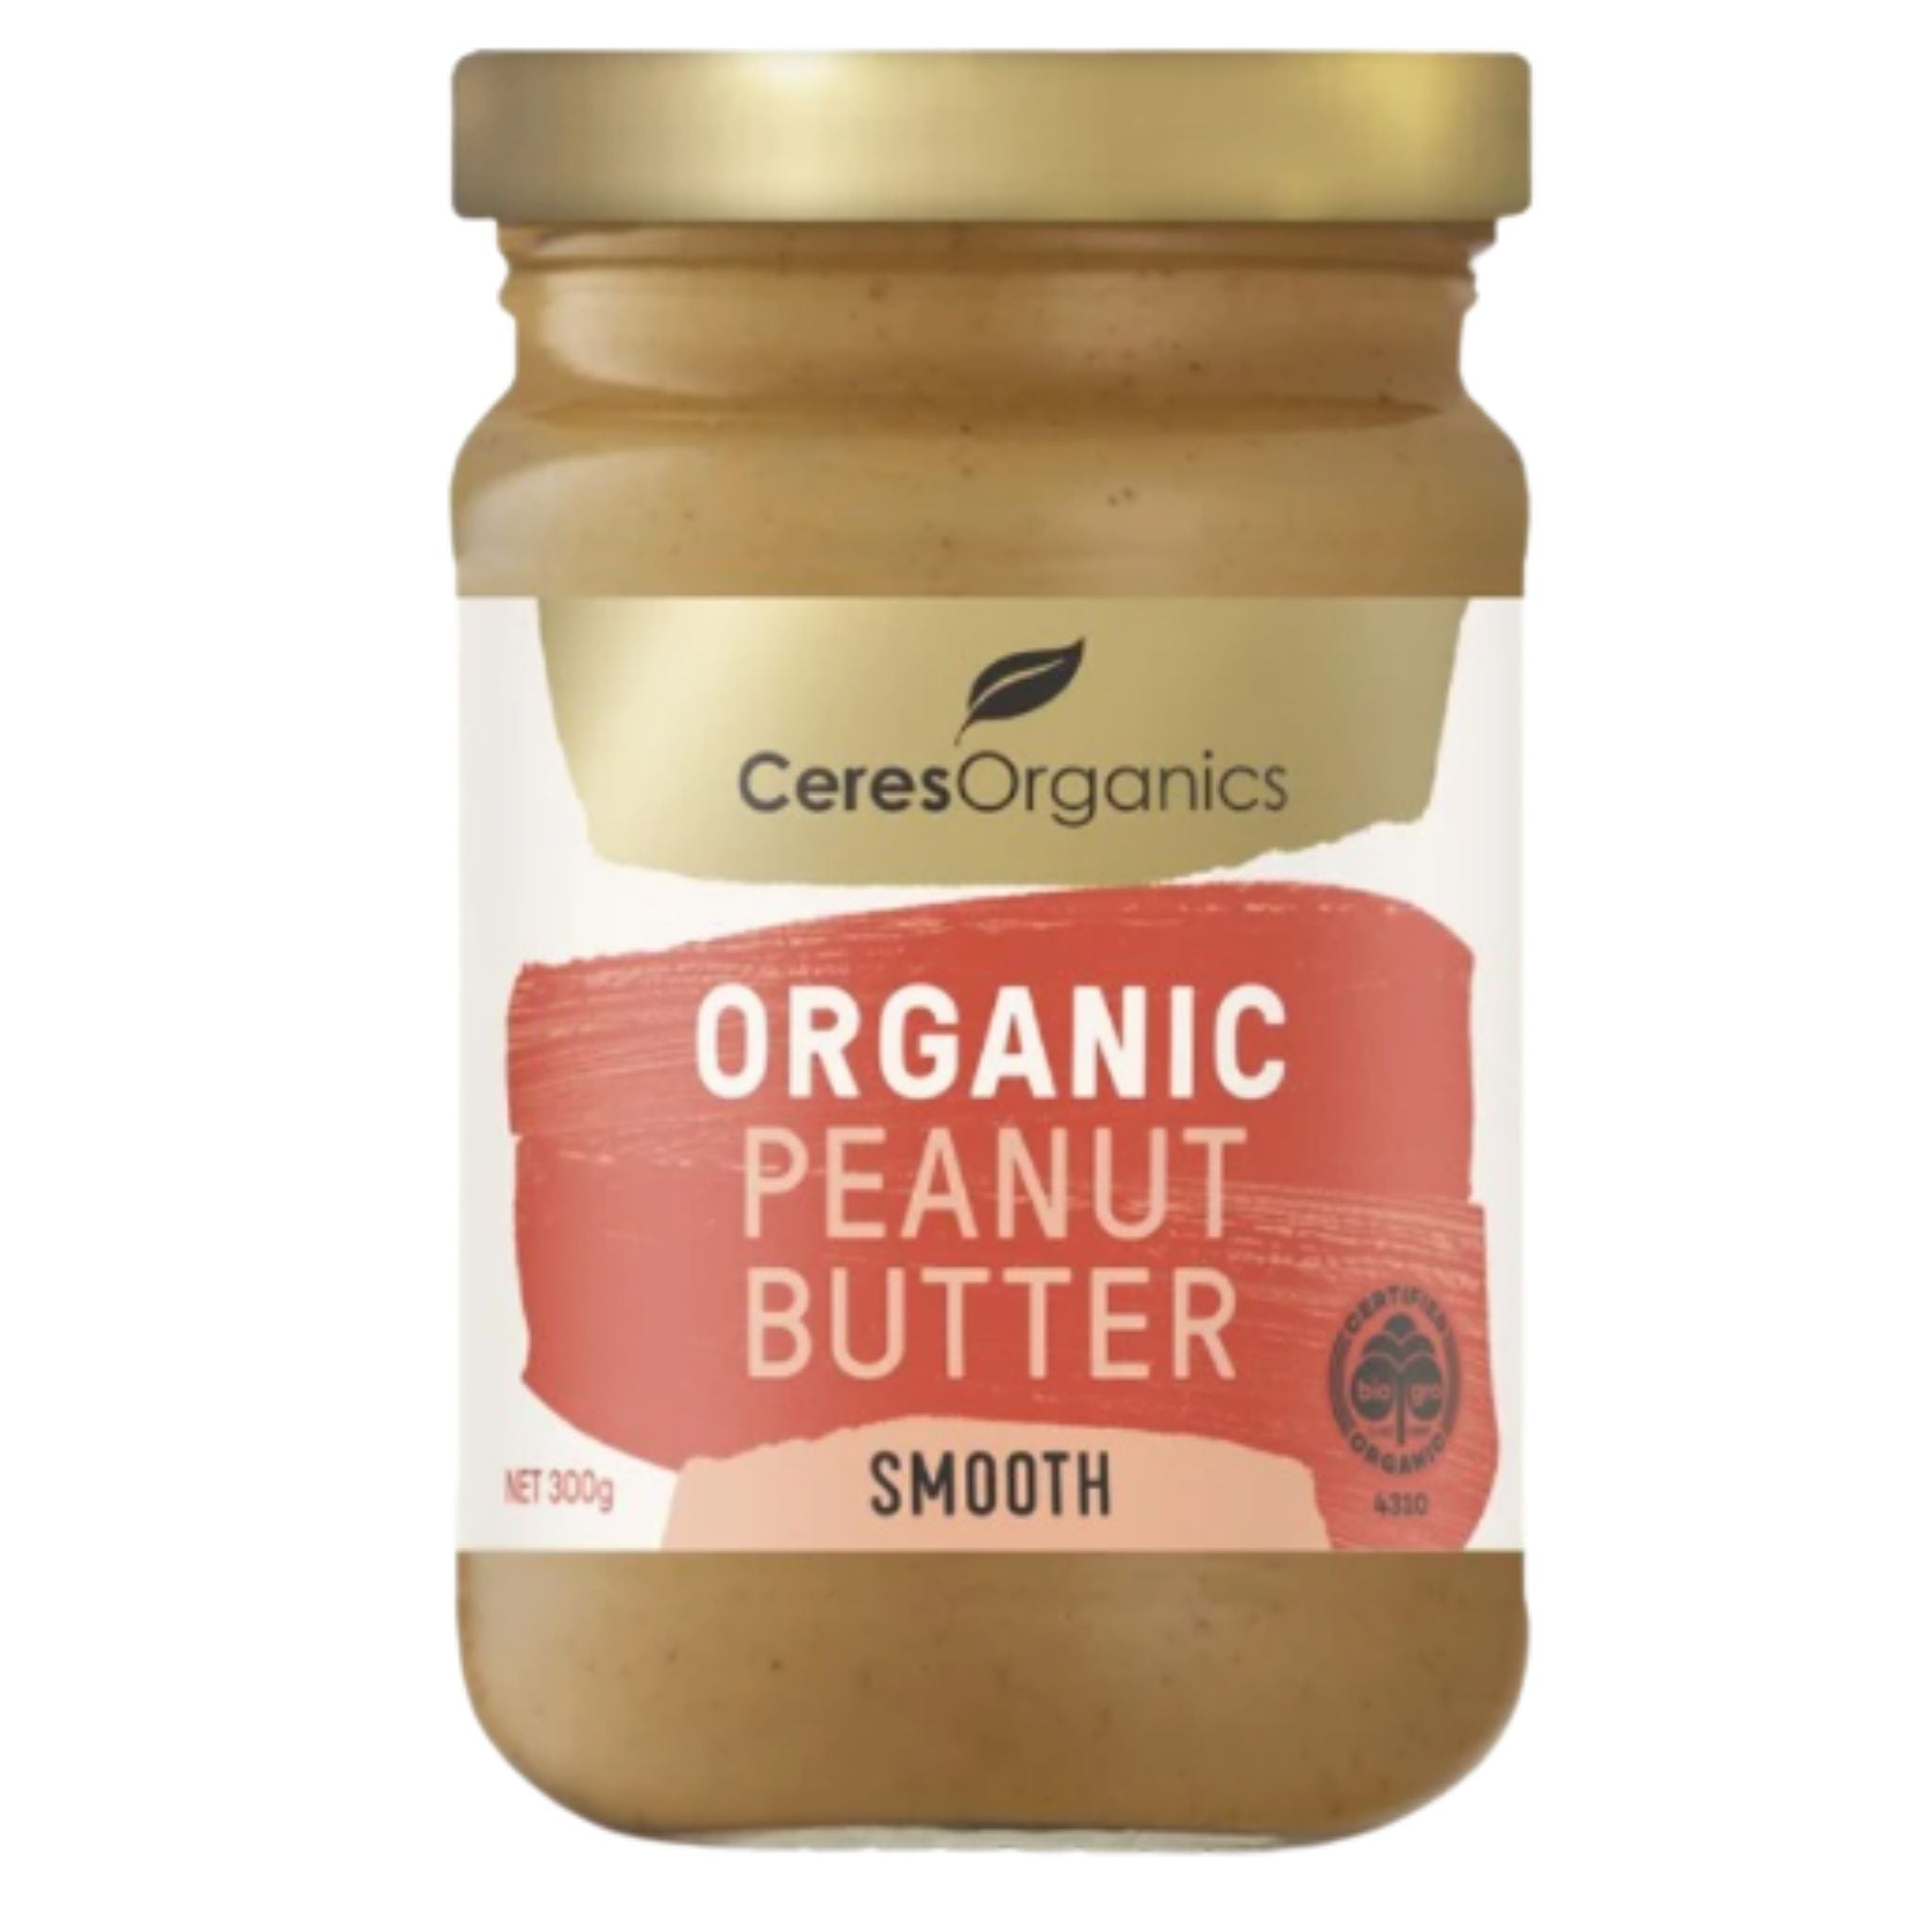 Peanut Butter (Organic) - Smooth. Ceres Organics. 300gr